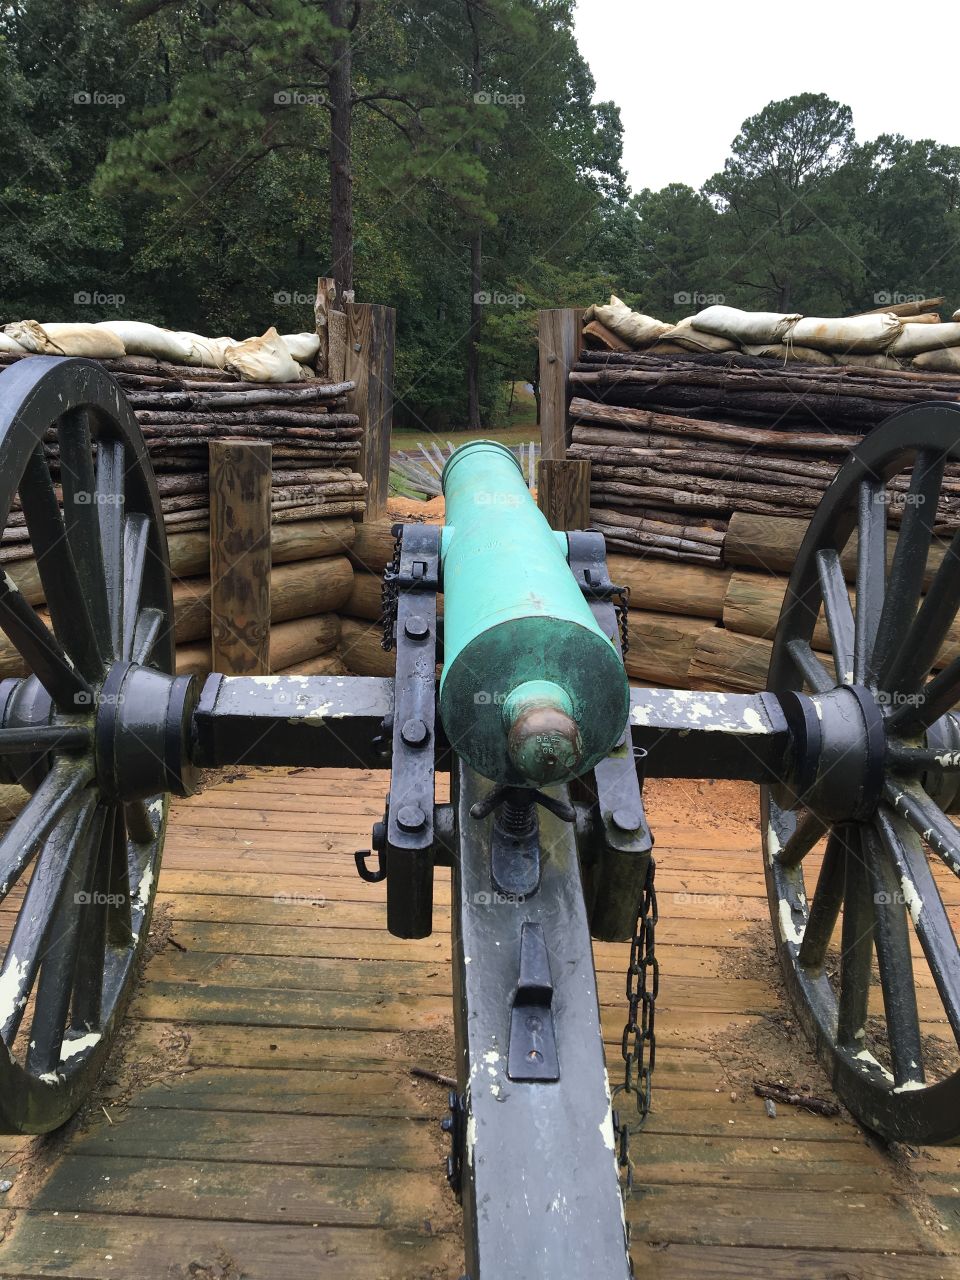 History is still alive at Petersburg National Battlefield